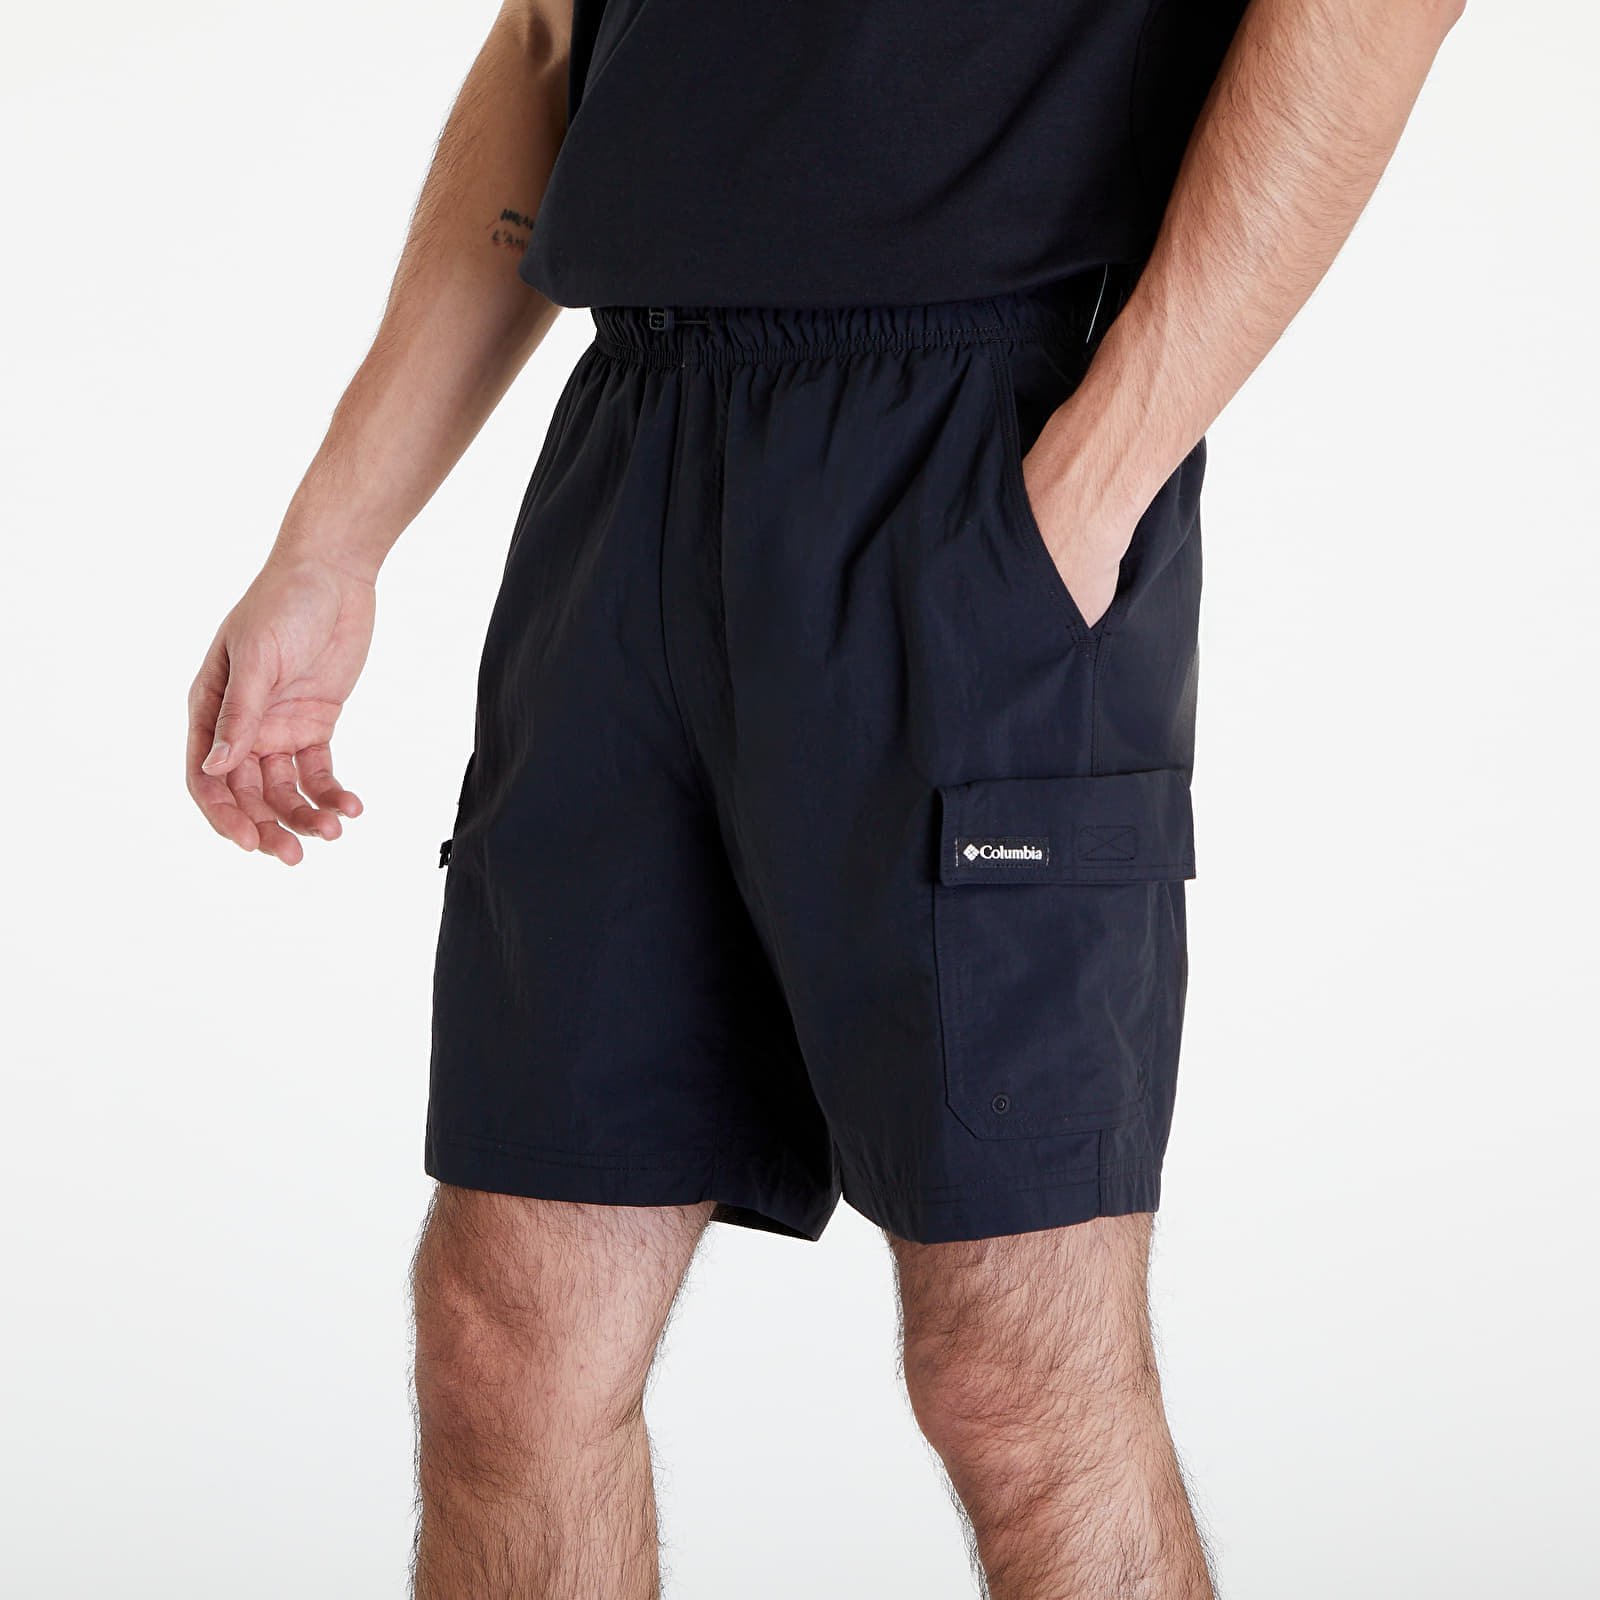 Summerdry Shorts